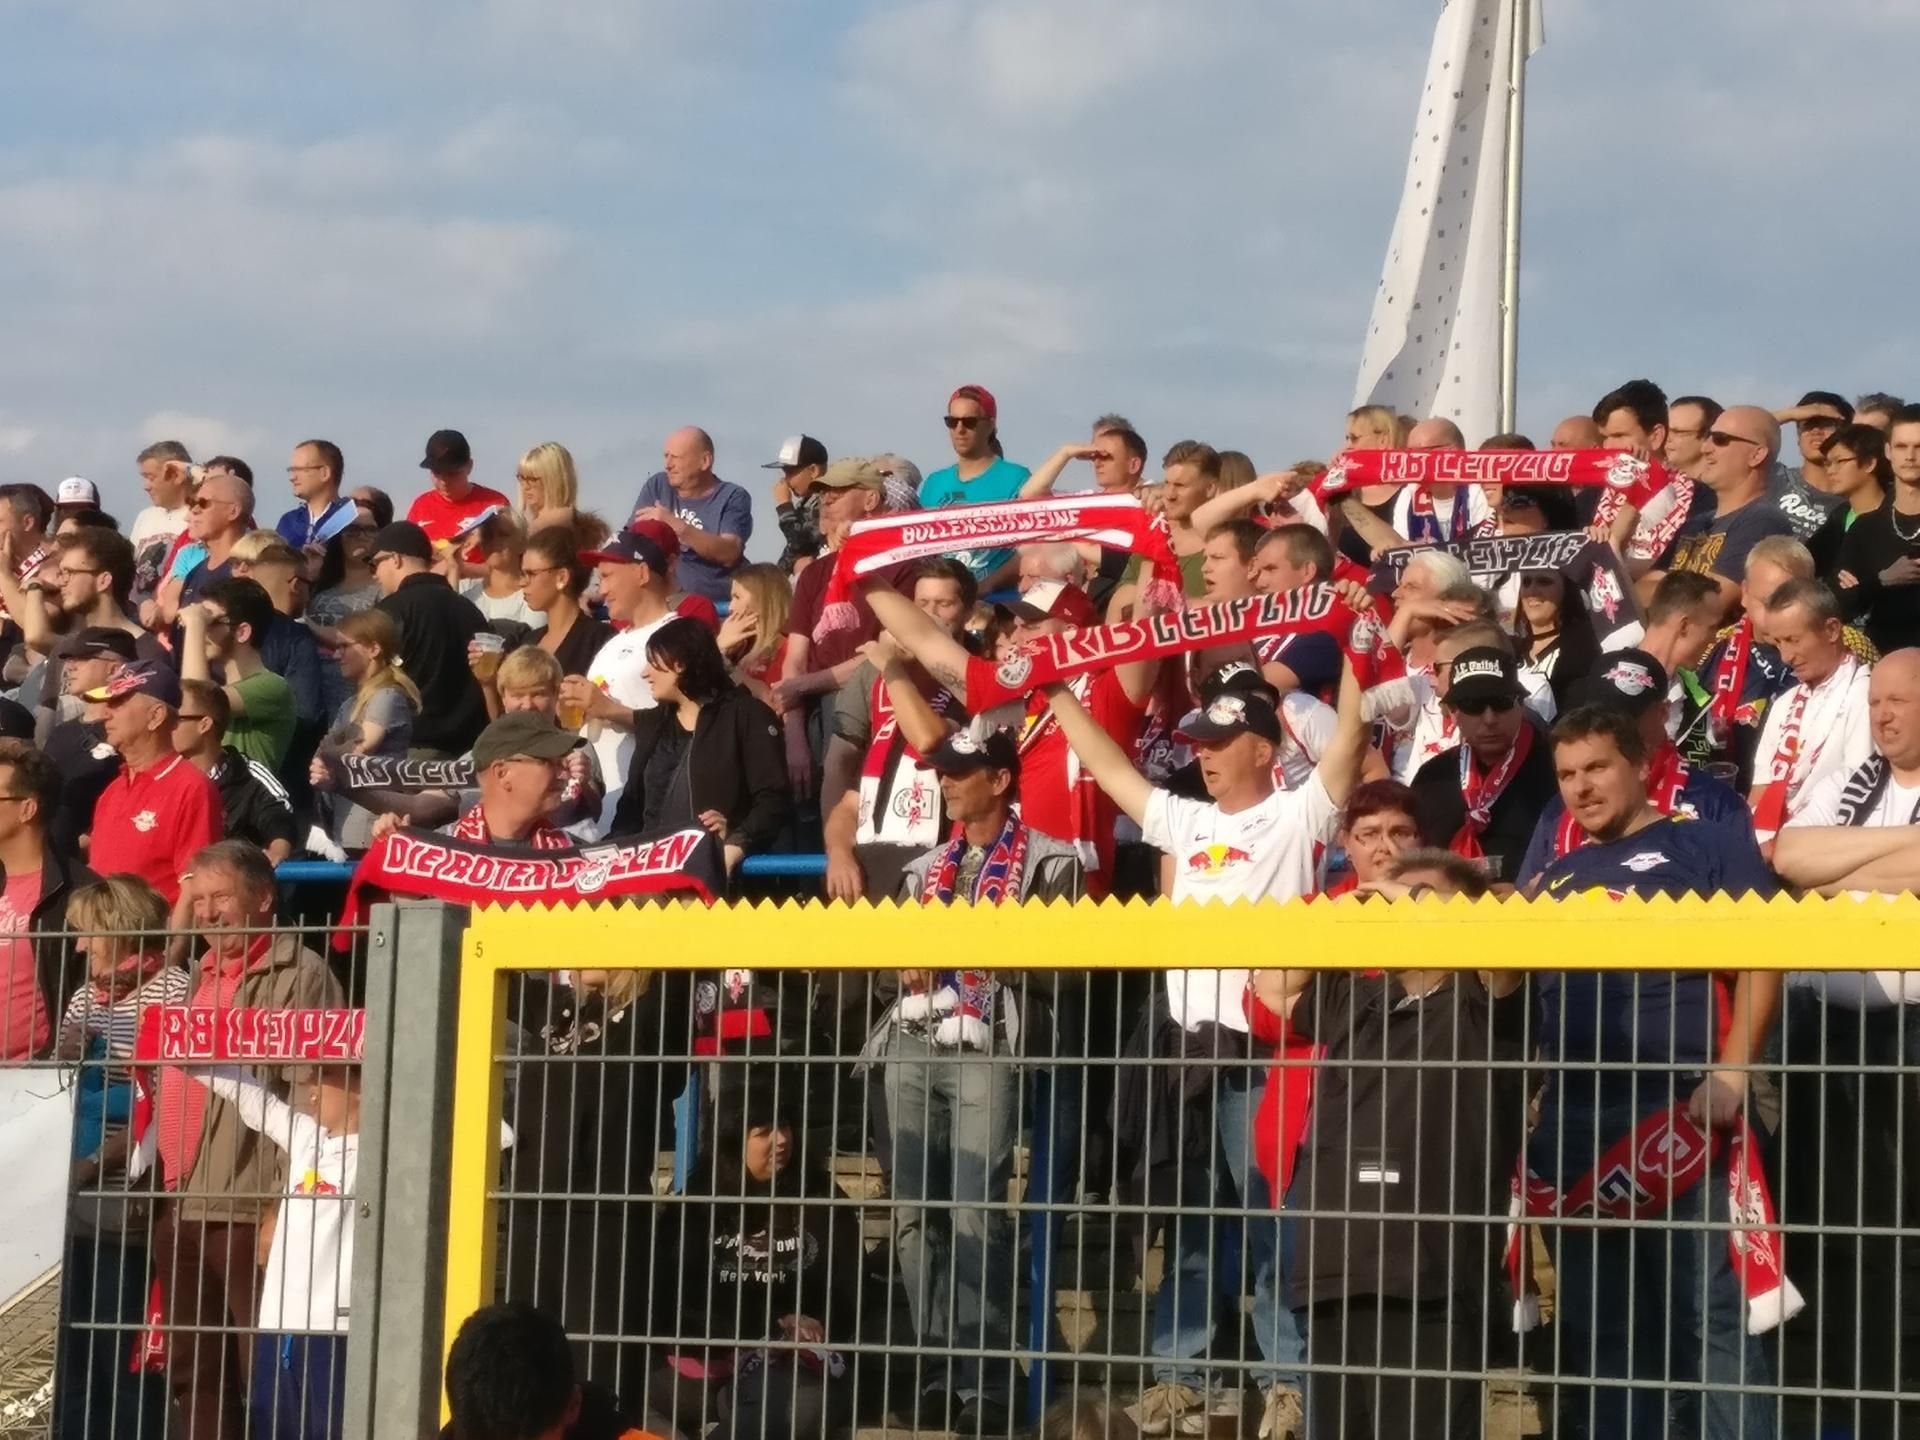 Test im Greifzu-Stadion Dessau 05 gegen RB Leipzig, Live-Ticker Abpfiff im Paul-Greifzu-Stadion